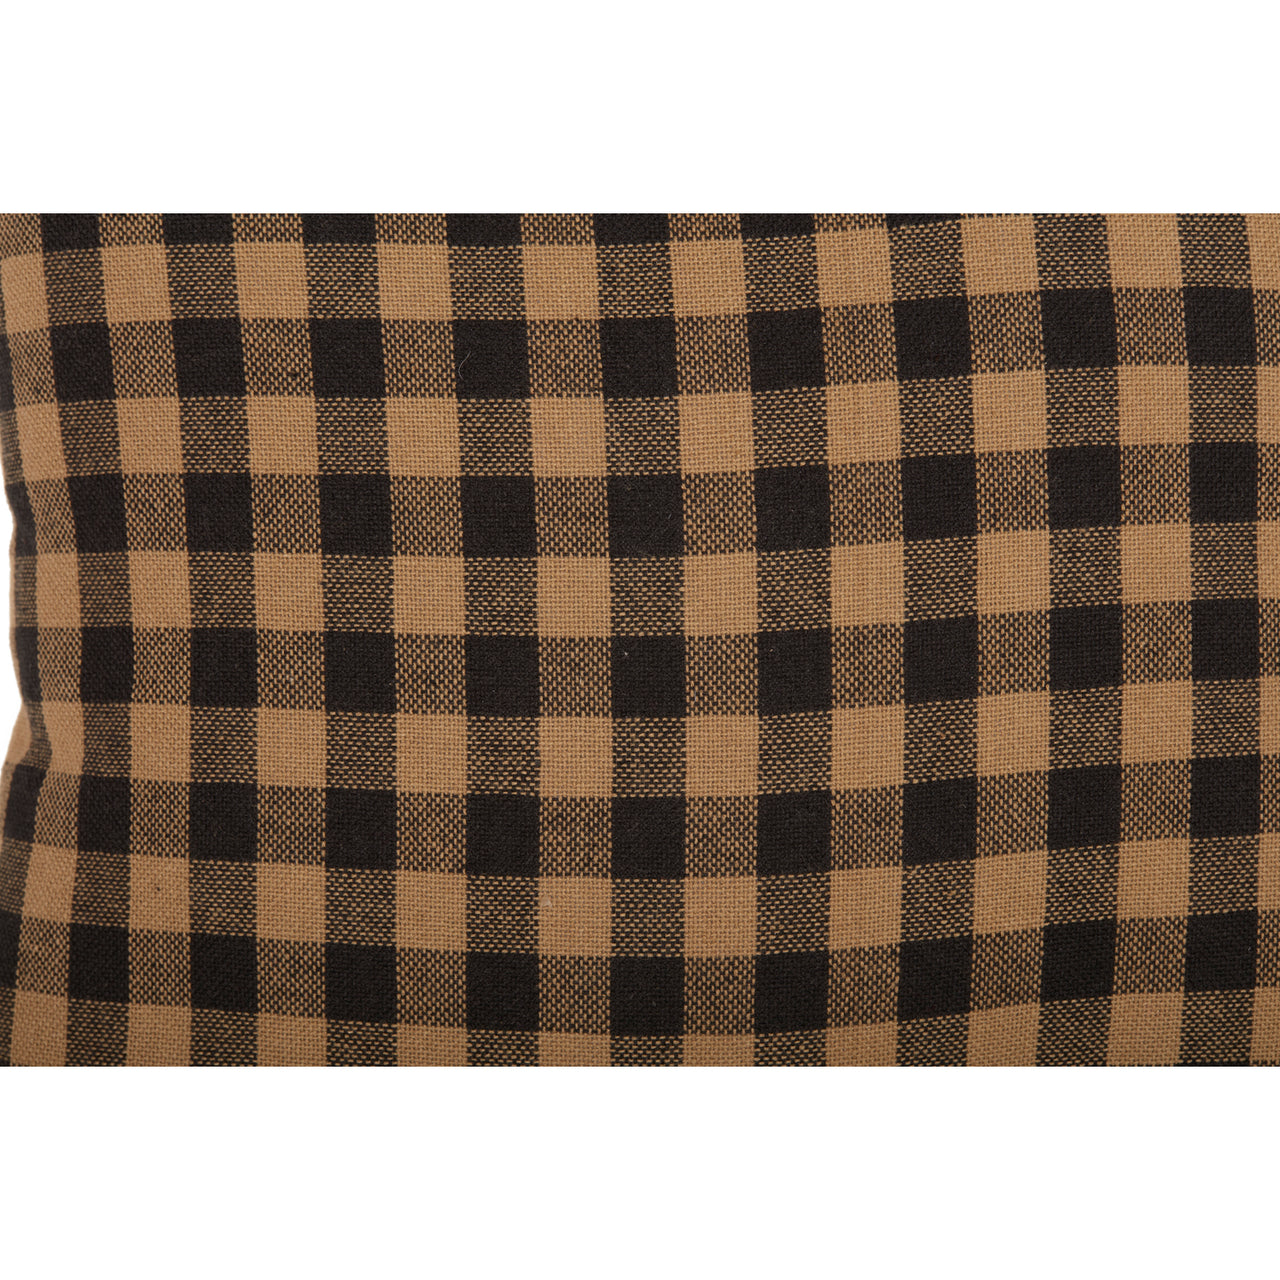 Black Check Fabric Pillow 12x12 VHC Brands